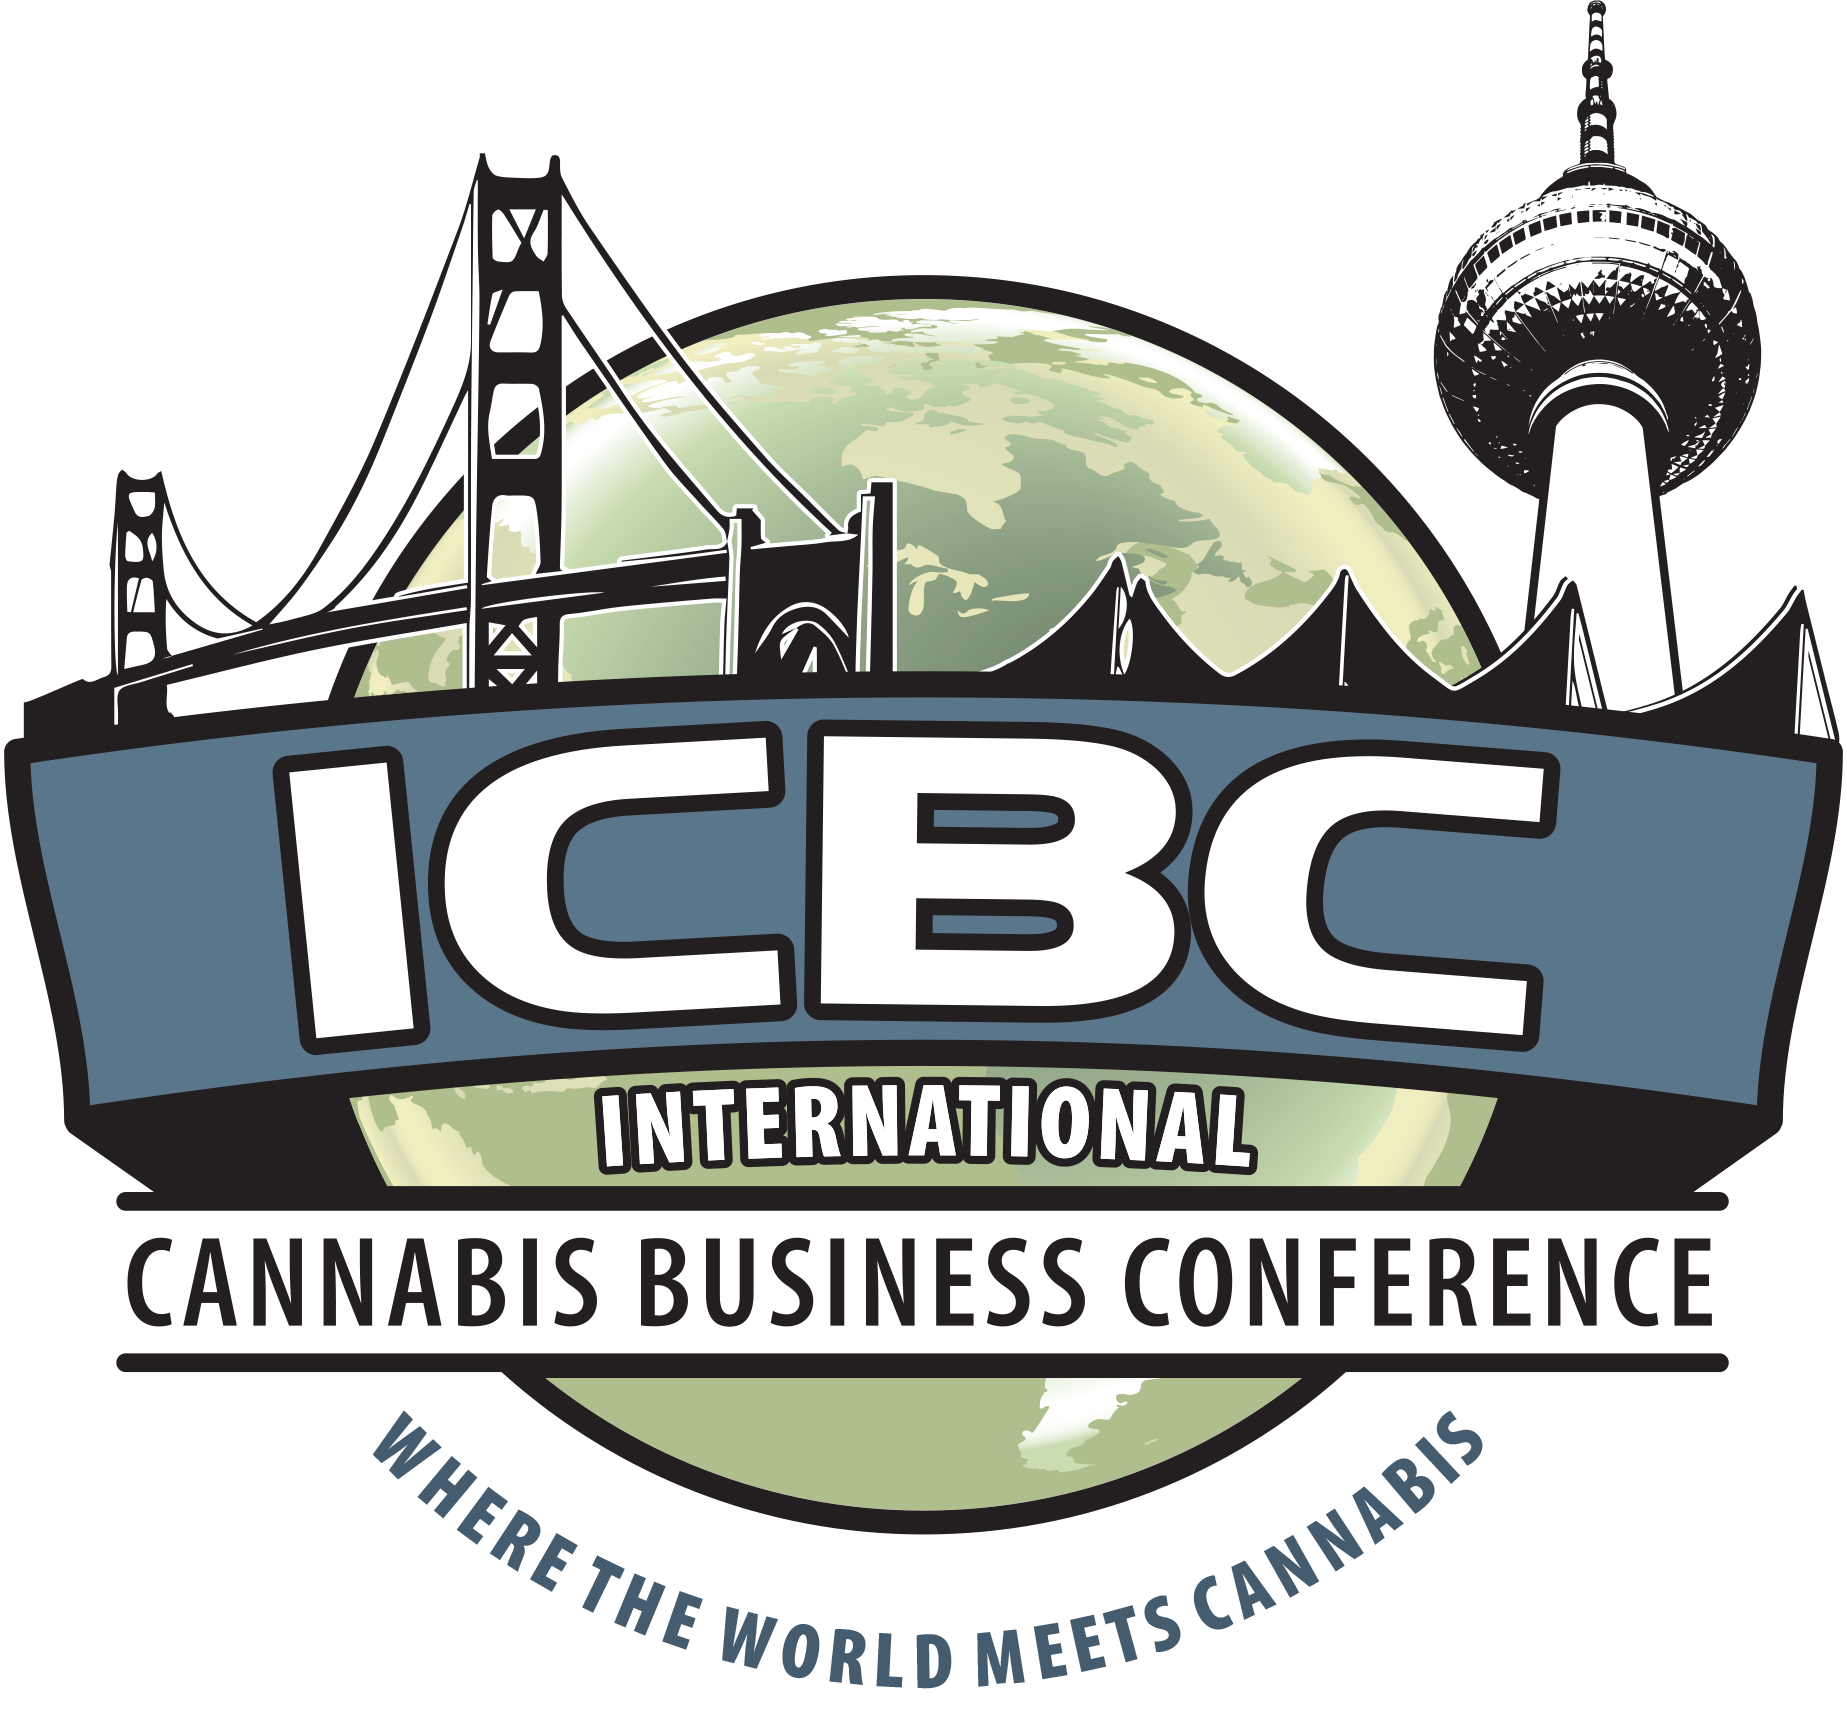 ICBC_Logo_WhereTheWorldMeetCannabis